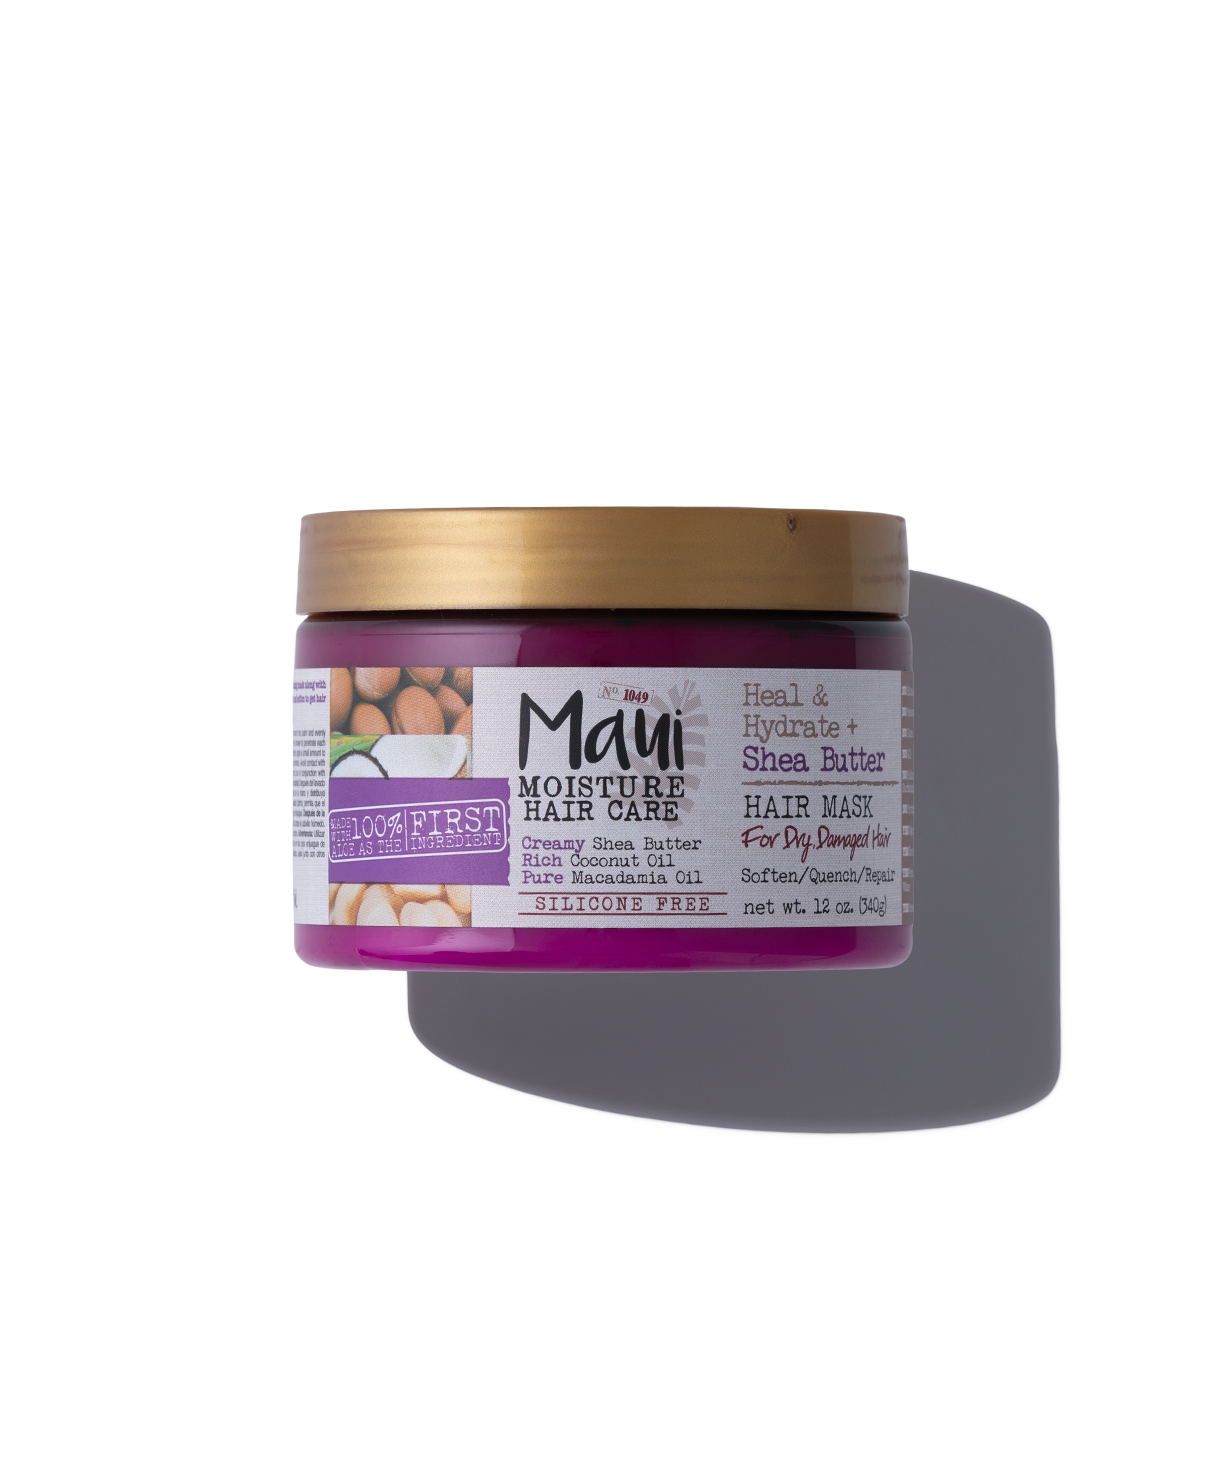 Heal & Hydrate + Shea Butter Hair Mask - Maui Moisture